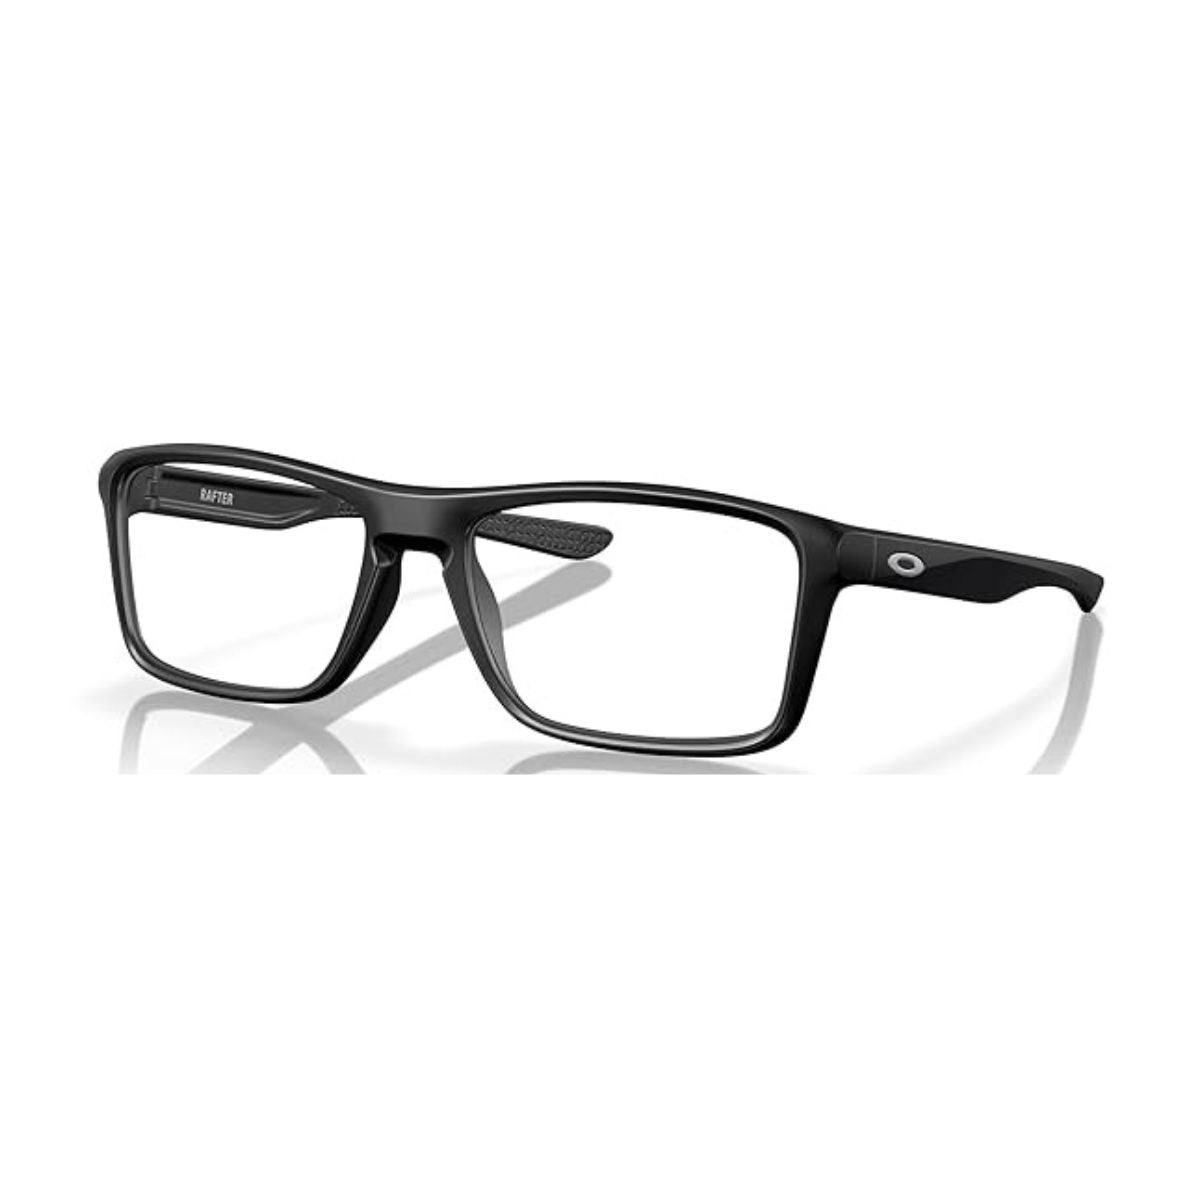 "Oakley 8178 0155 optical eyeglasses frame for men's at optorium"